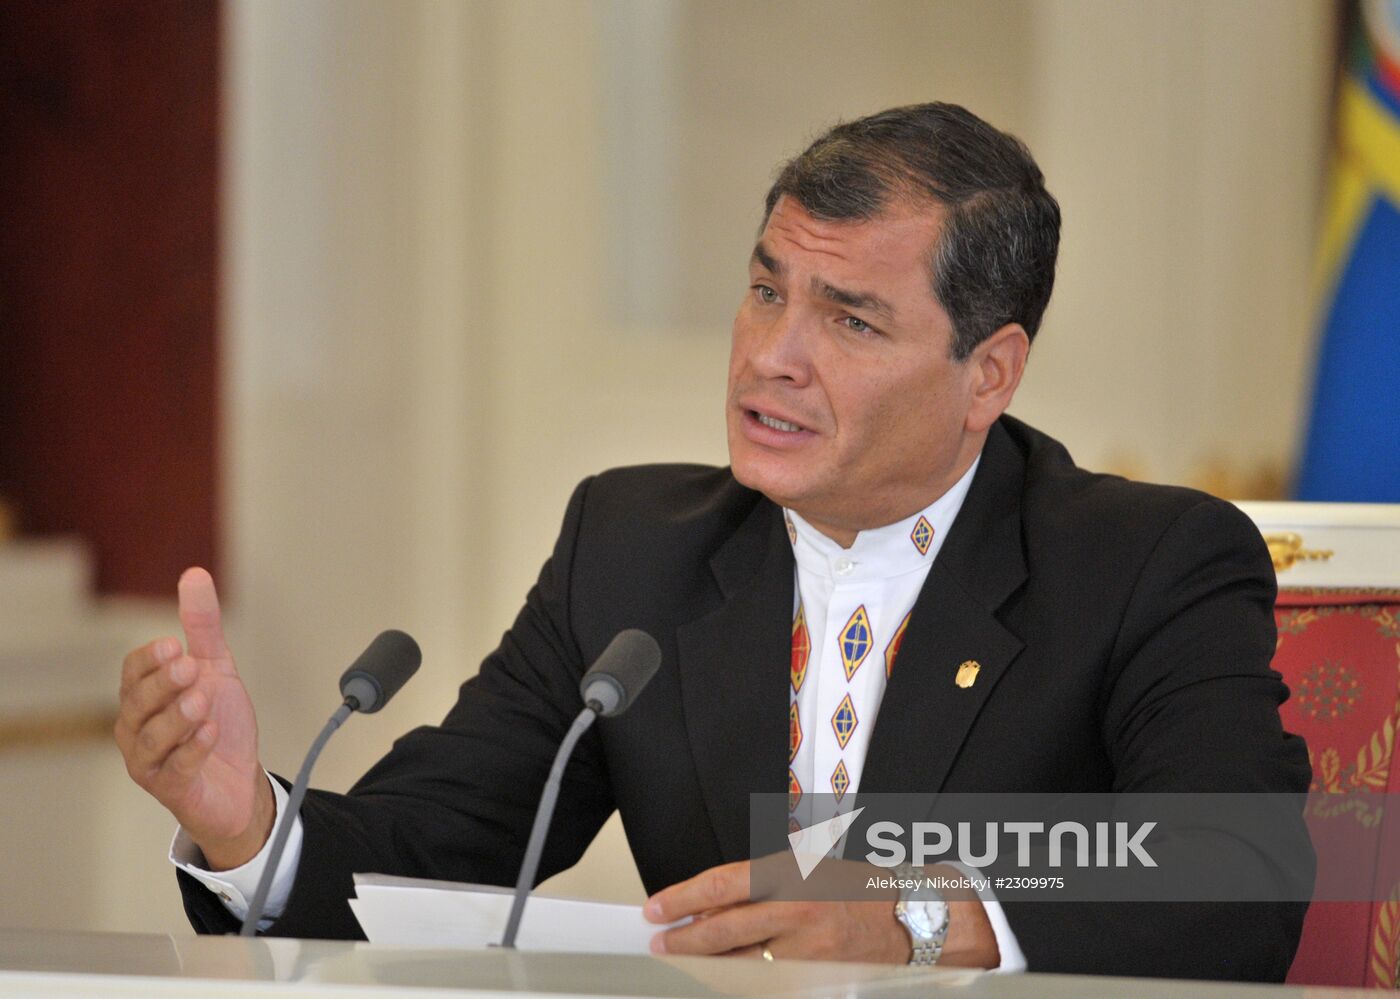 Vladimir Putin held talks with Rafael Correa in the Kremlin